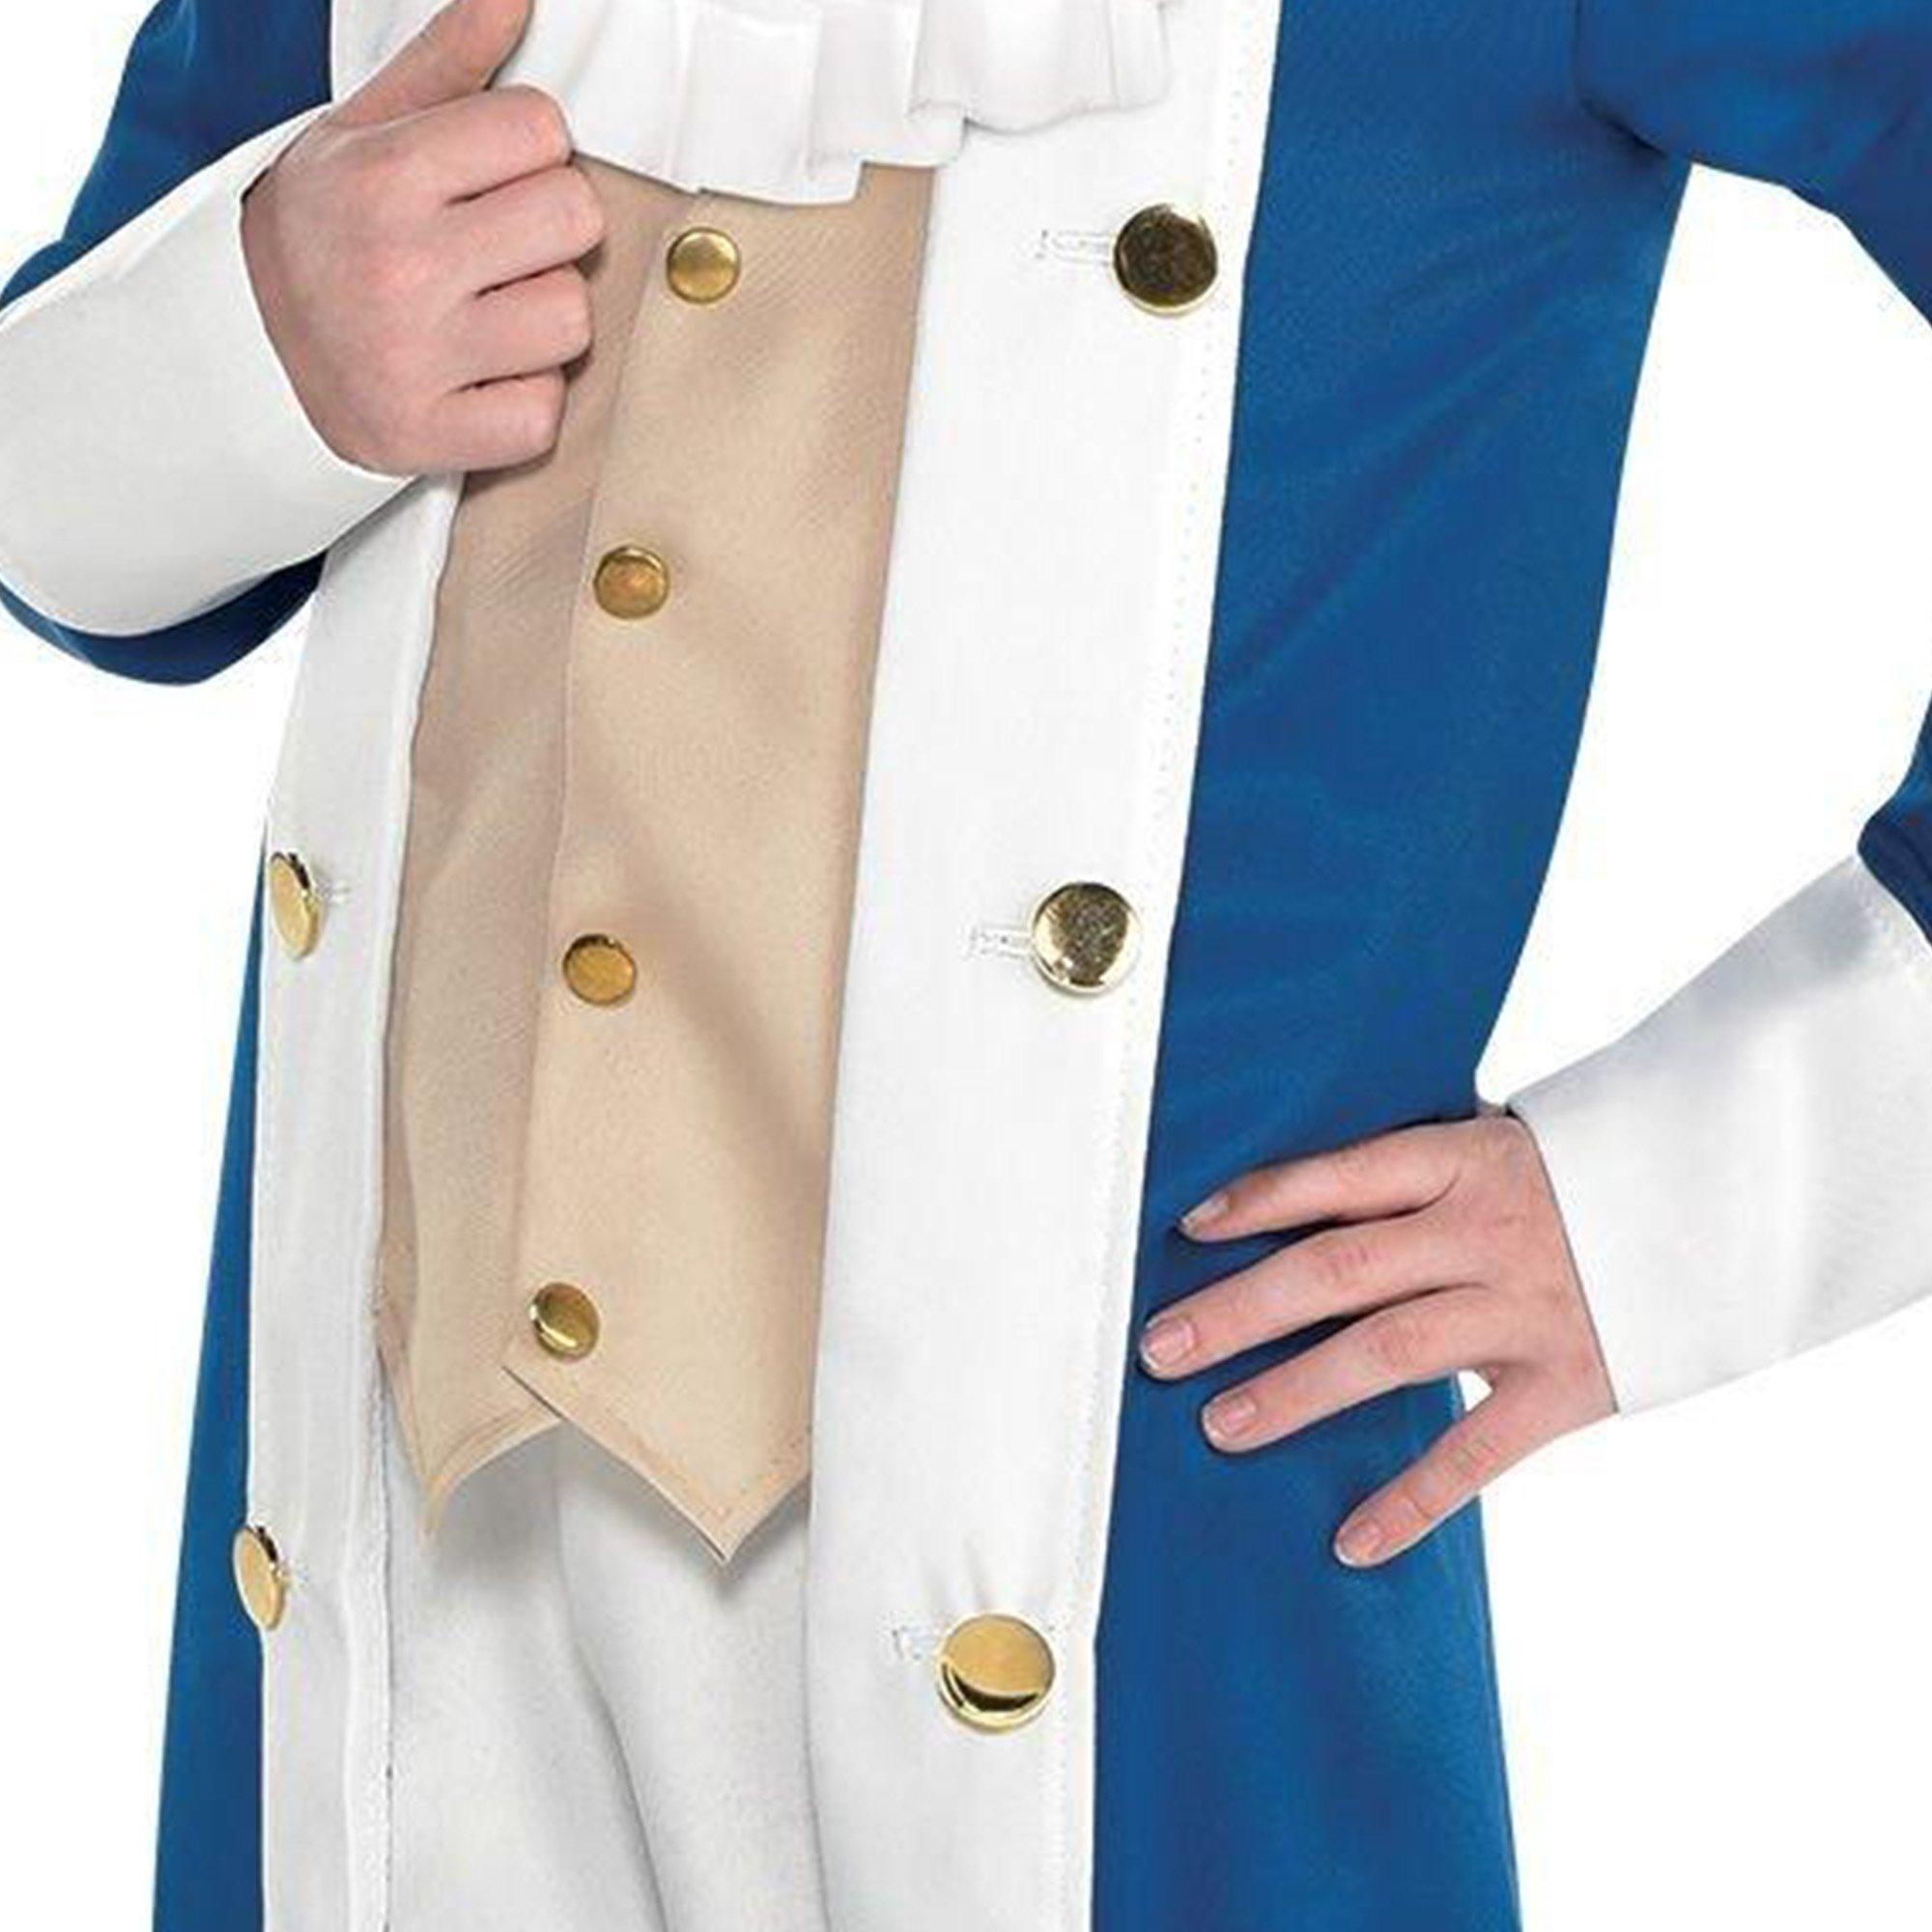 Boys George Washington Costume Accessory Kit